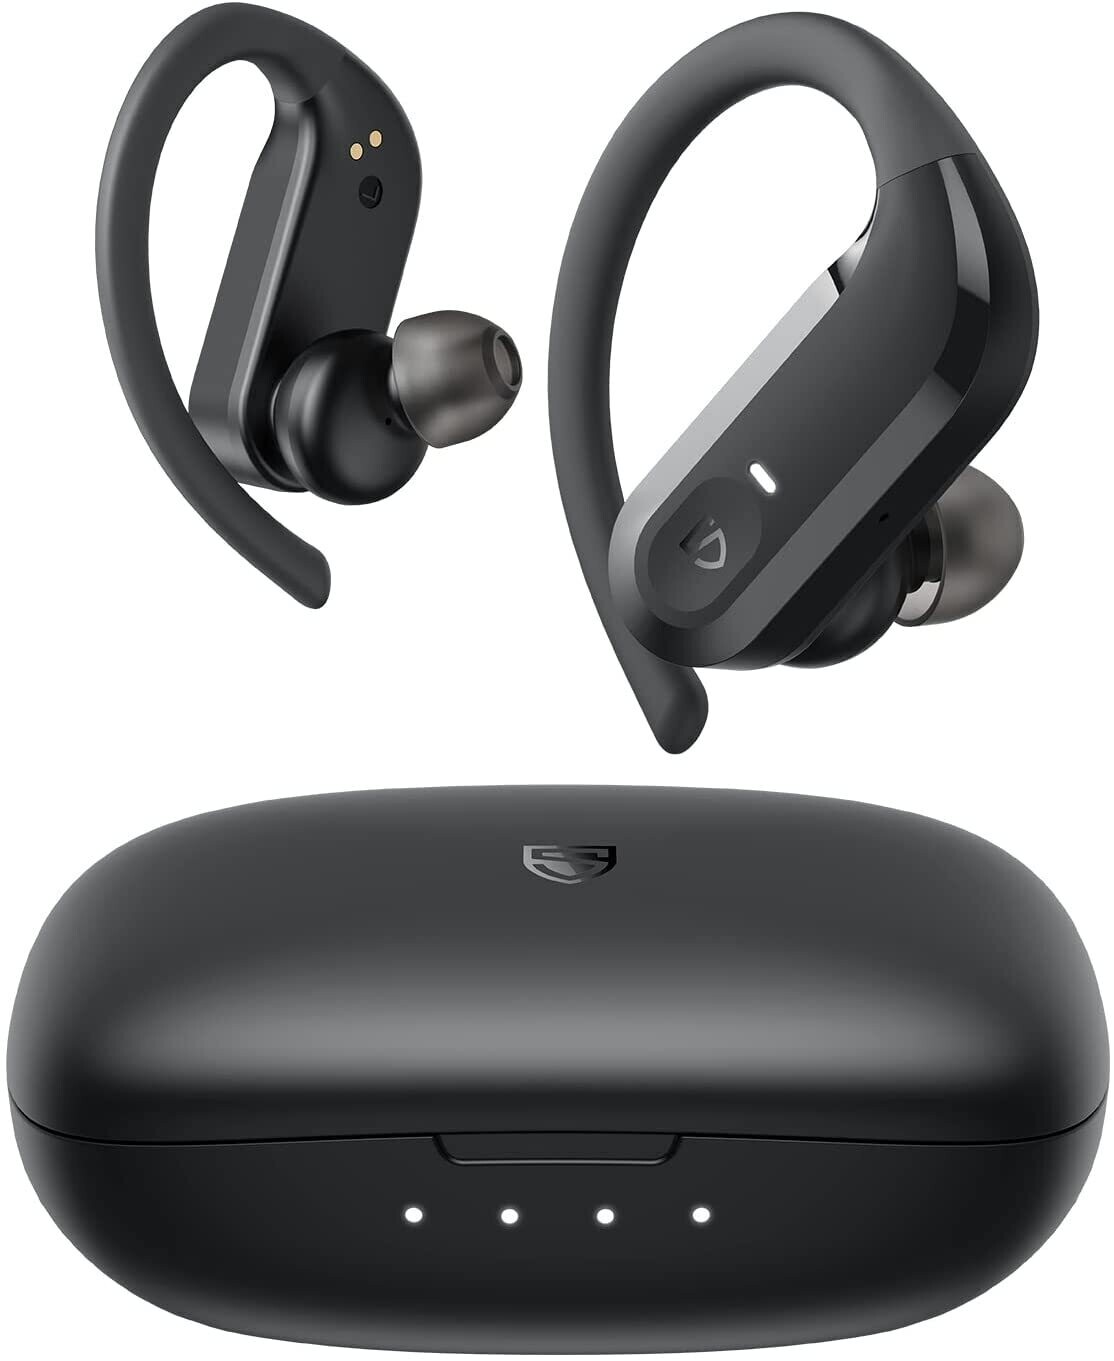 Soundpeats S5 Sports BT 5.0 Wireless Headphones with Mic Waterproof OEM Ear Hooks Earphones Music Earbuds for Phone